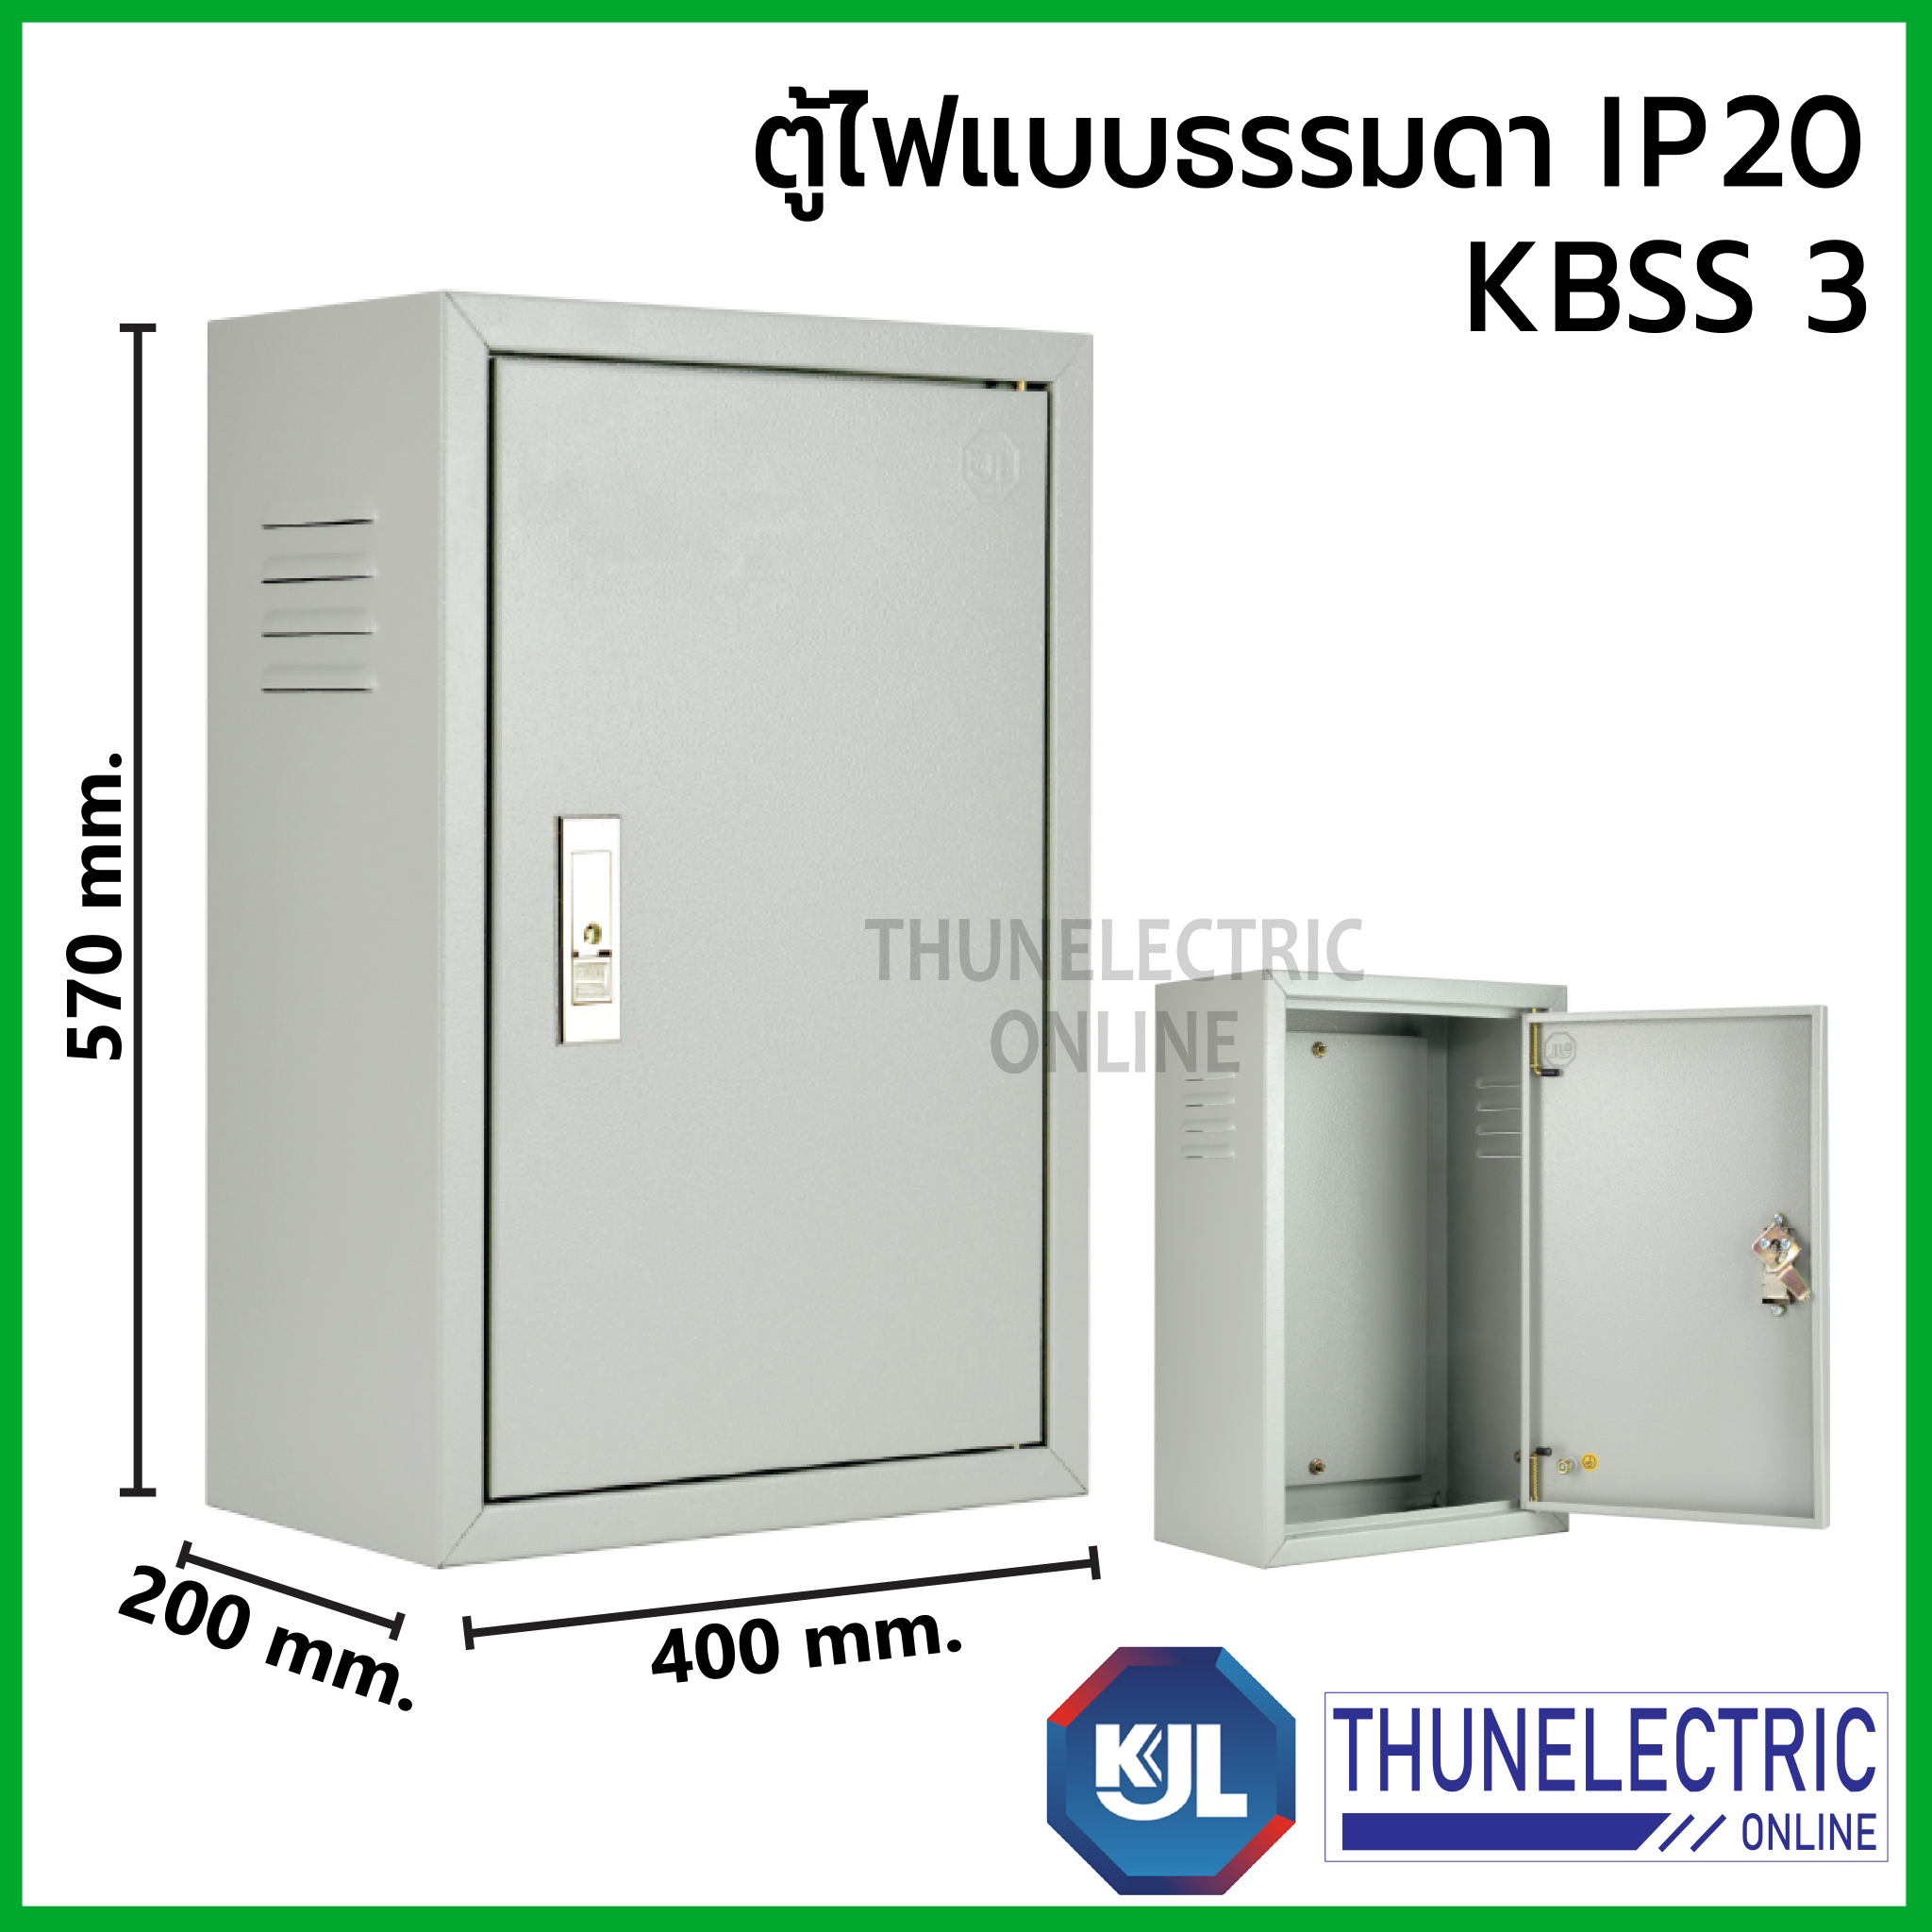 KJL ตู้ไฟ KBSS 3 ขนาด 40x57x20 cm ตู้เหล็ก IP20 ตู้คอนโทรล ตู้ไฟสวิตซ์บอร์ด ตู้ไซด์มาตรฐาน ธรรมดา ตู้เหล็กเบอร์ 3 ธันไฟฟ้า Thunelectric